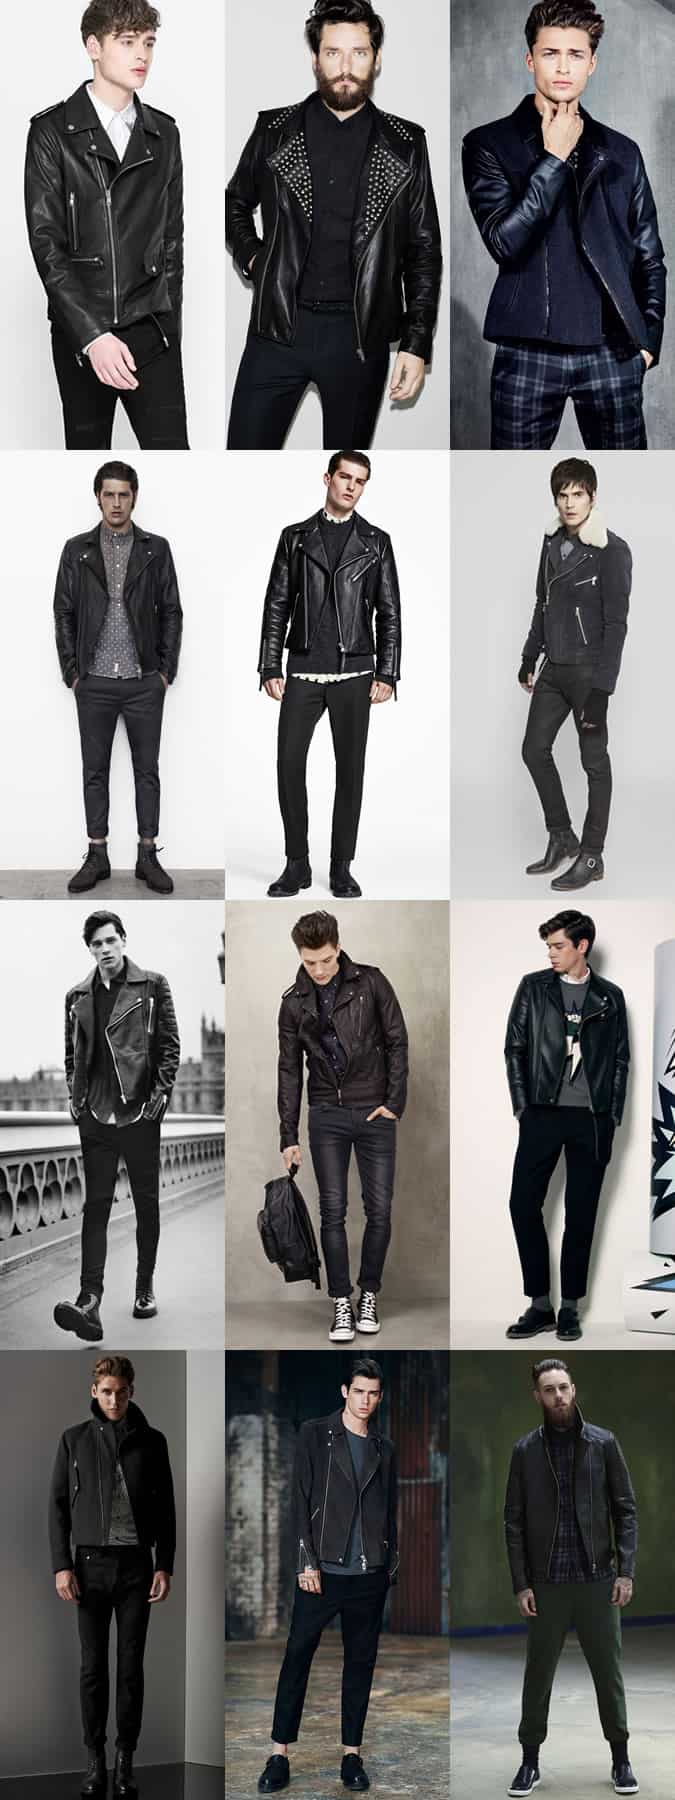 Men's Leather Biker Jackets Outfit Inspiration Lookbook